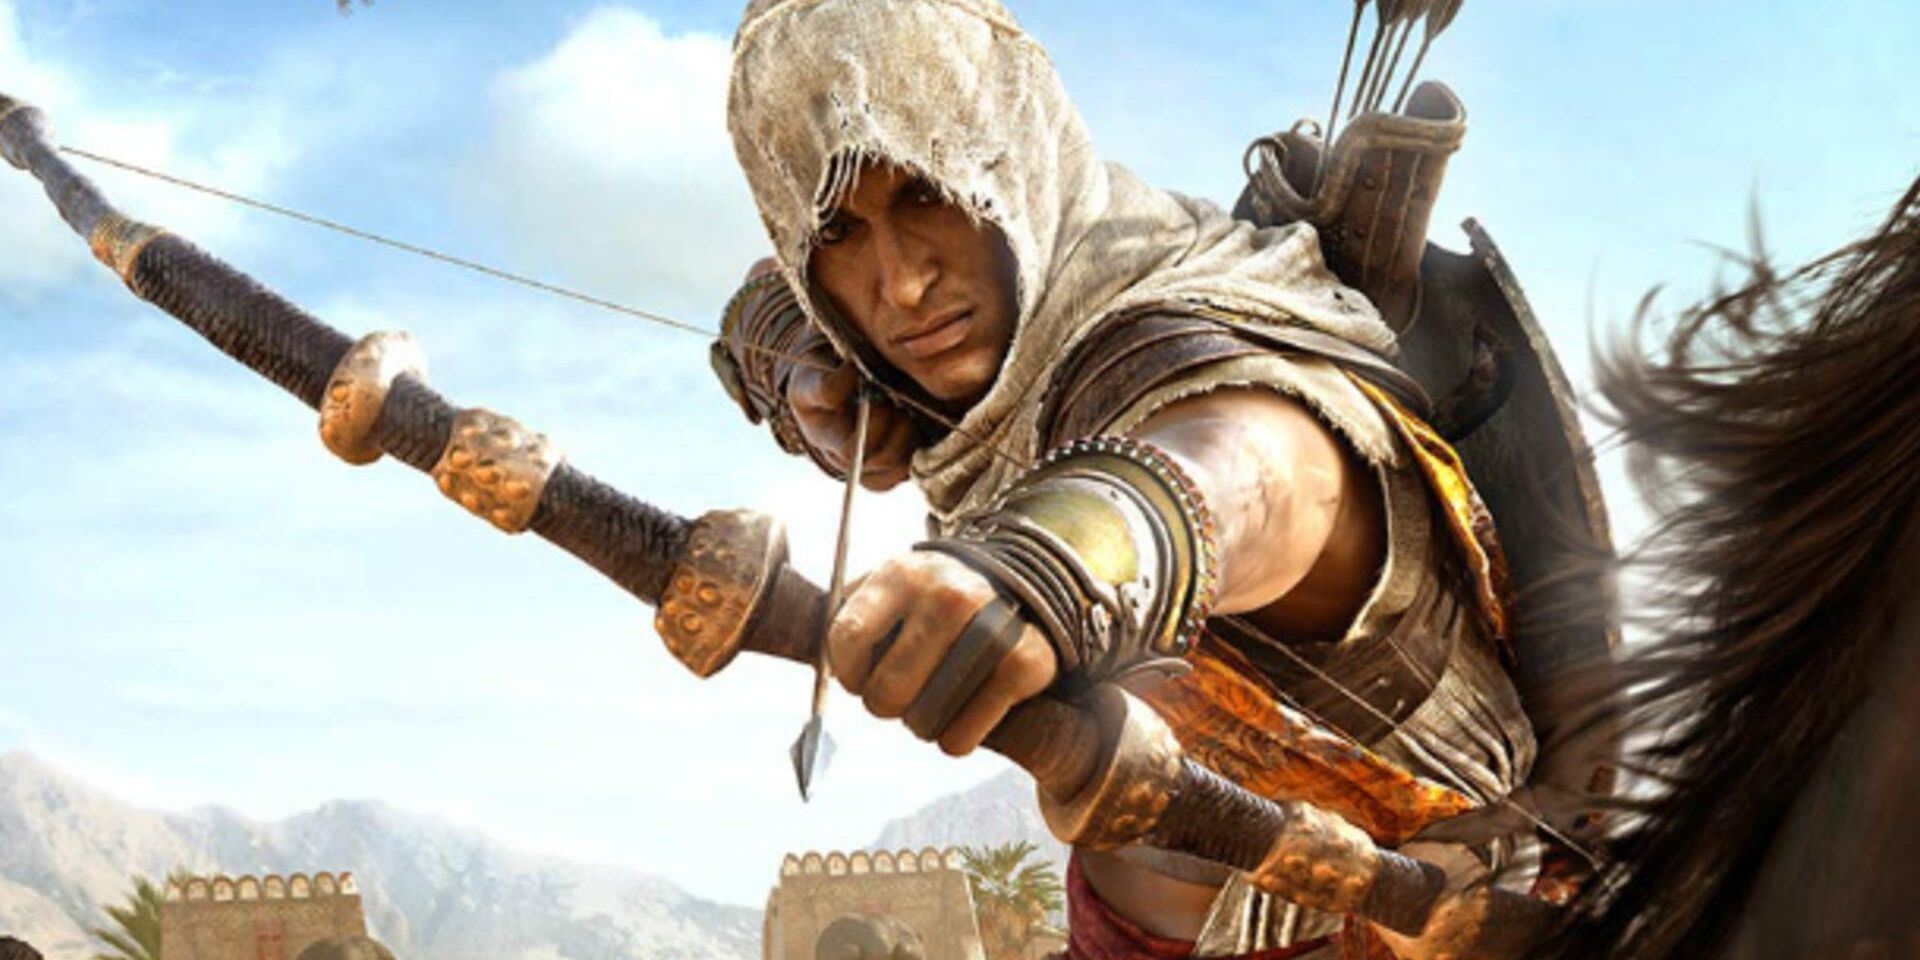 Bayek aiming an arrow in Assassin's Creed Origins 